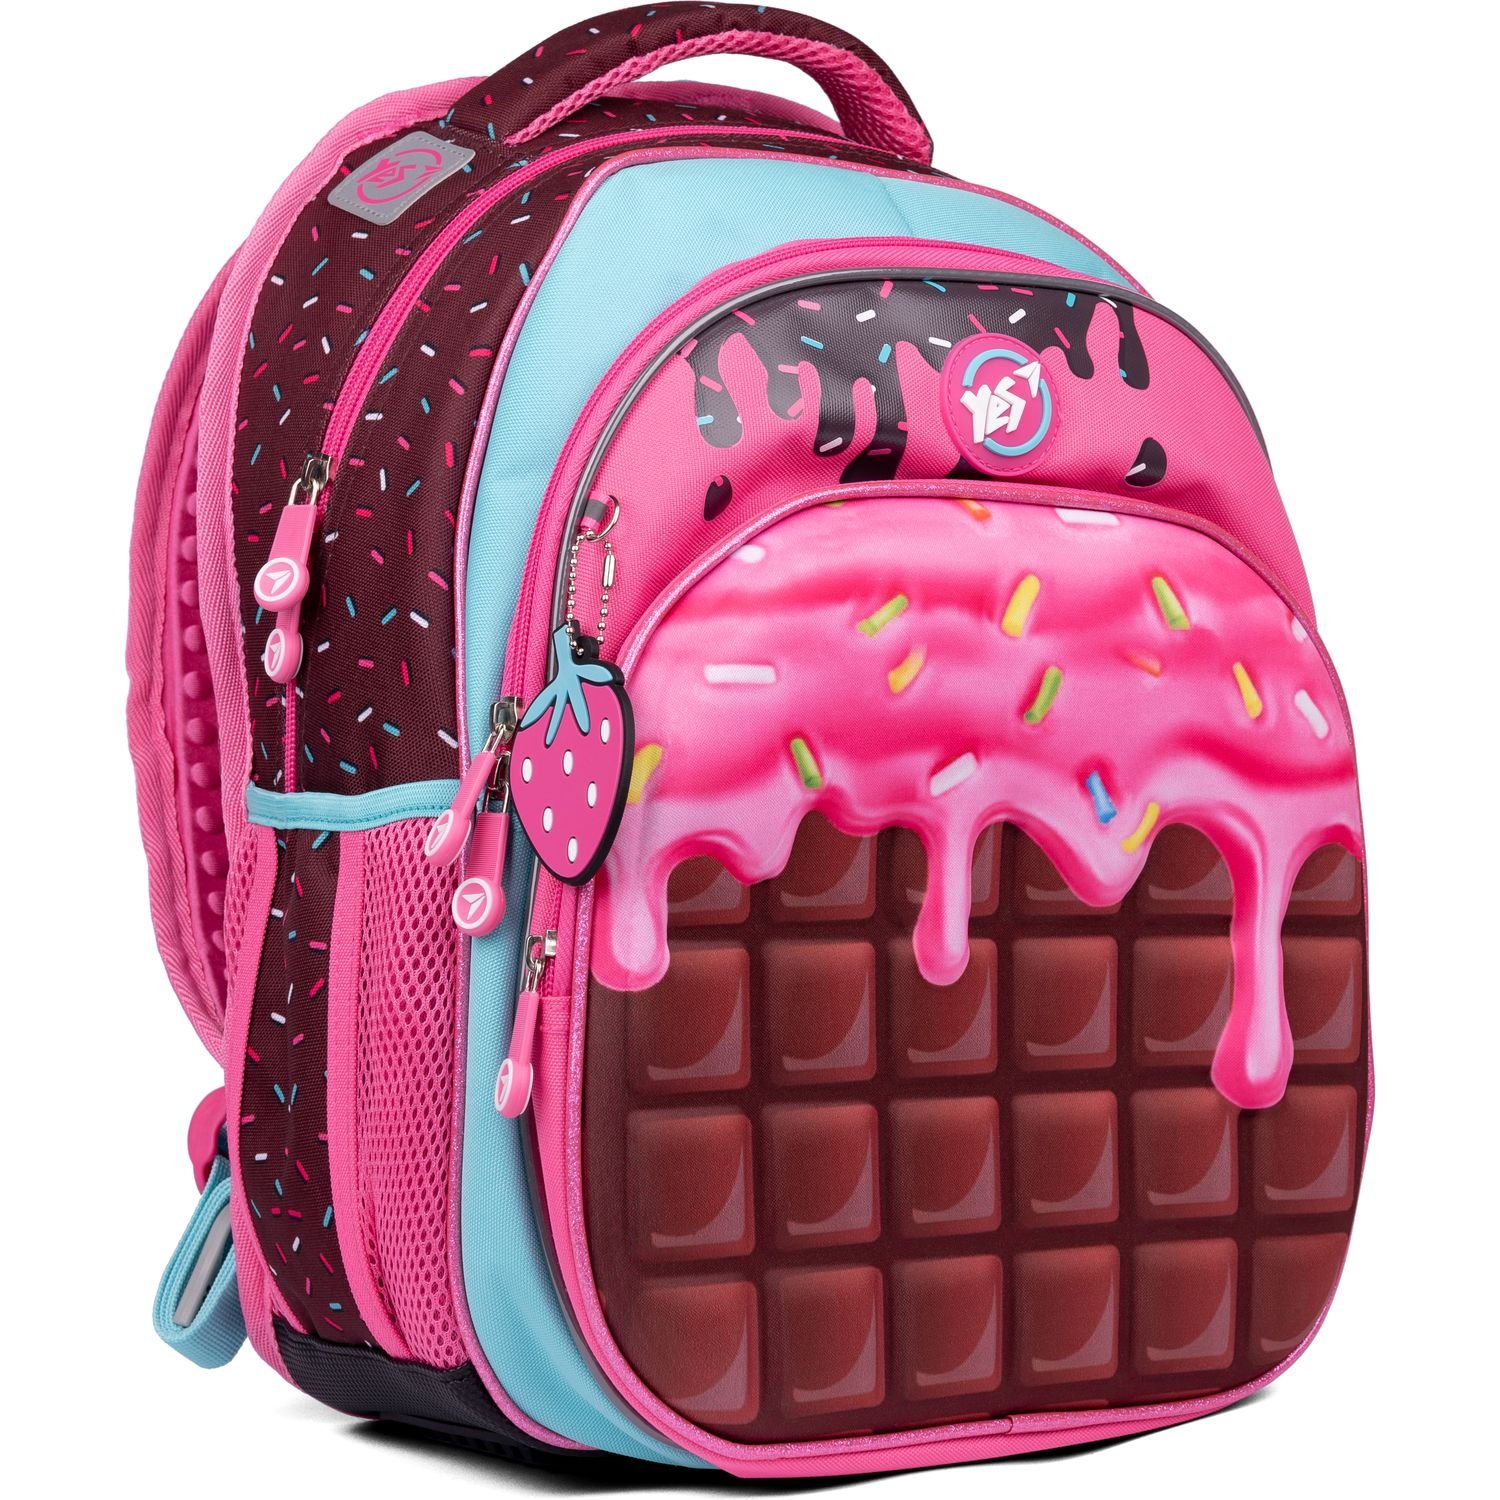 Рюкзак Yes S-58 Sweet cream, розовый с коричневым (553152) - фото 2